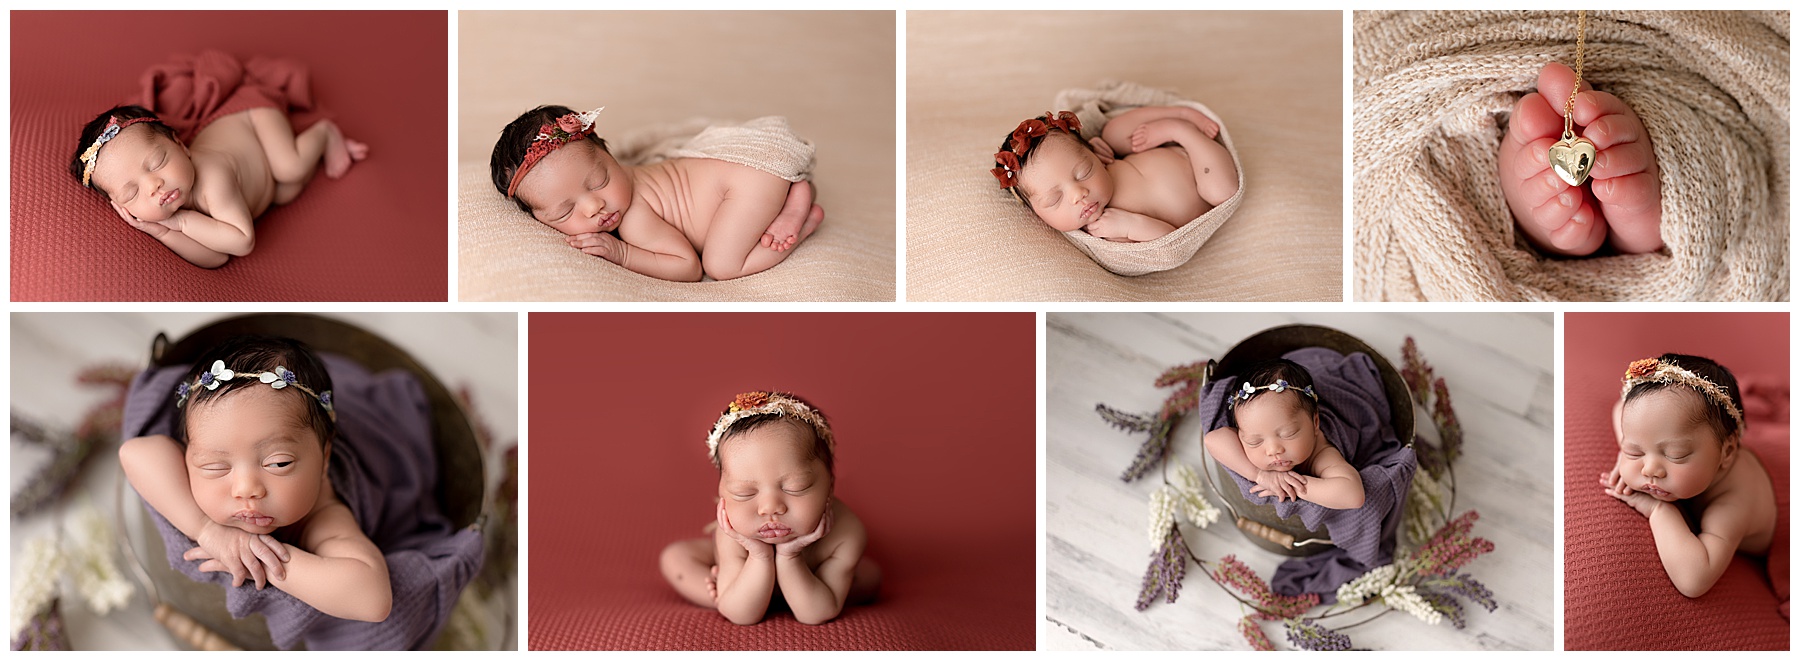 baby milestone photos include baby girl in various newborn photos